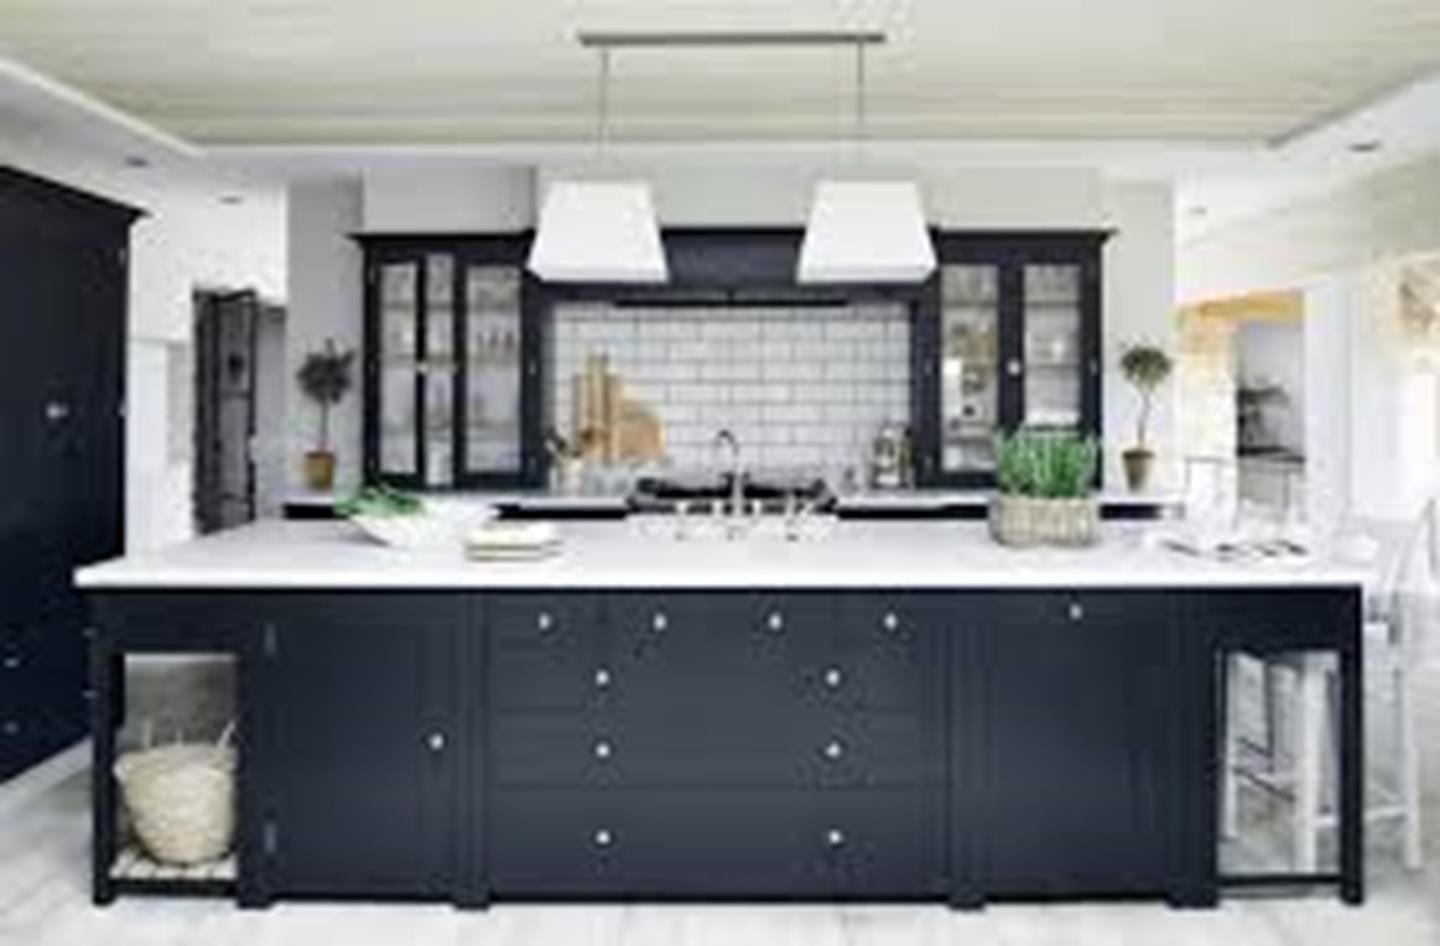 Keuken met donkere kleur